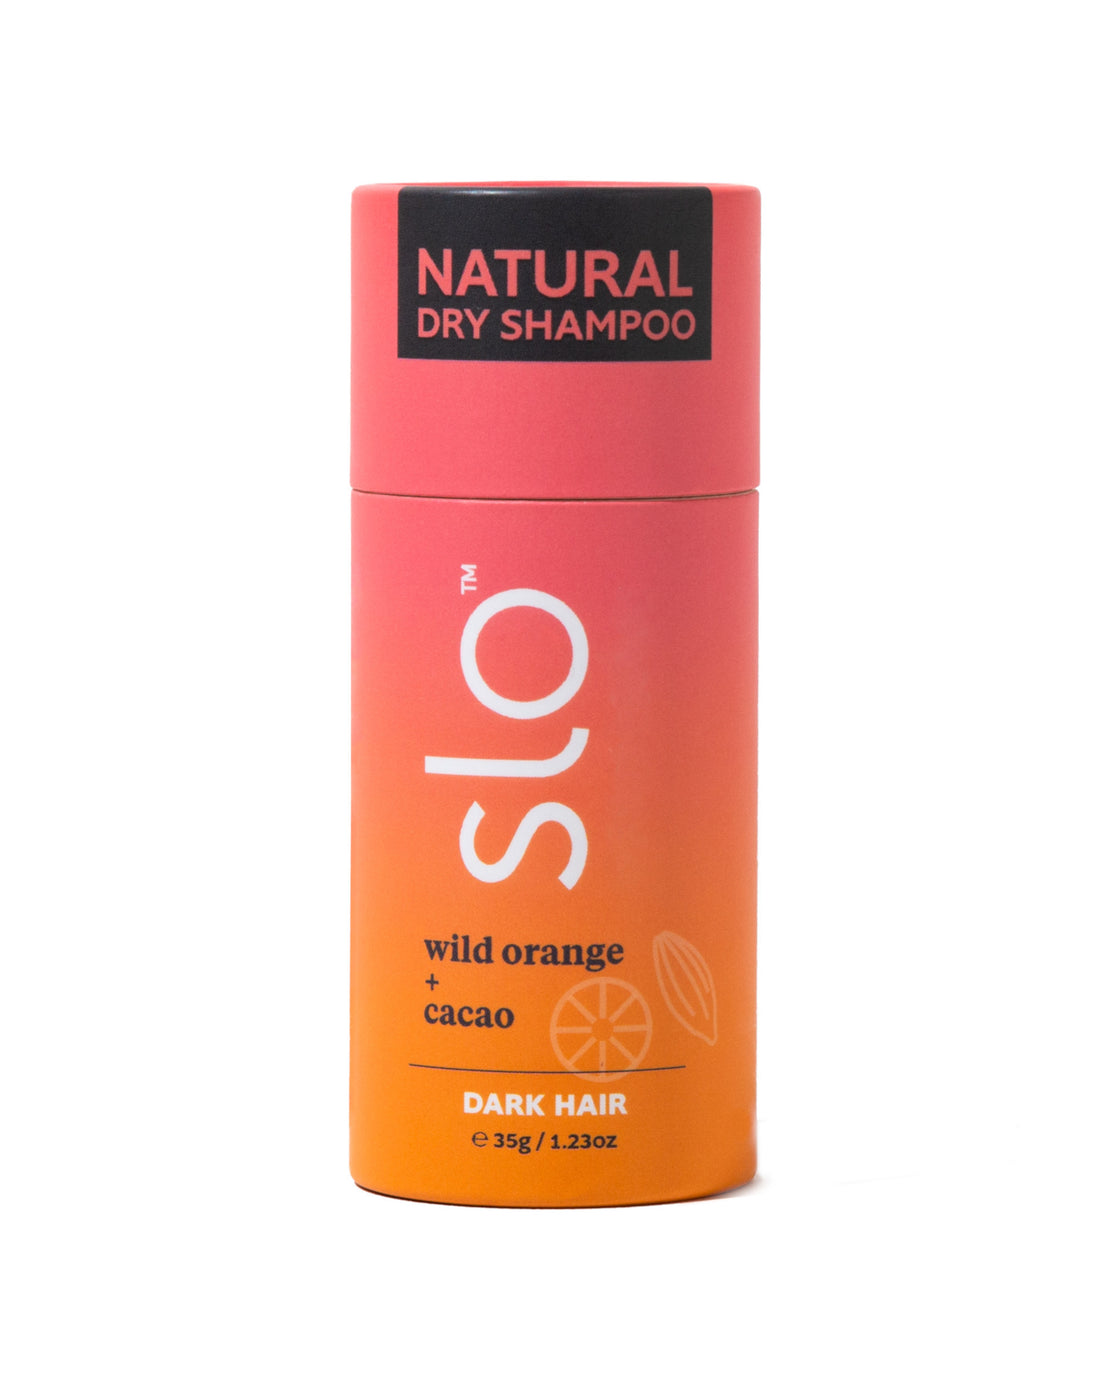 Natural Dry Shampoo - Box of Dark Hair Type